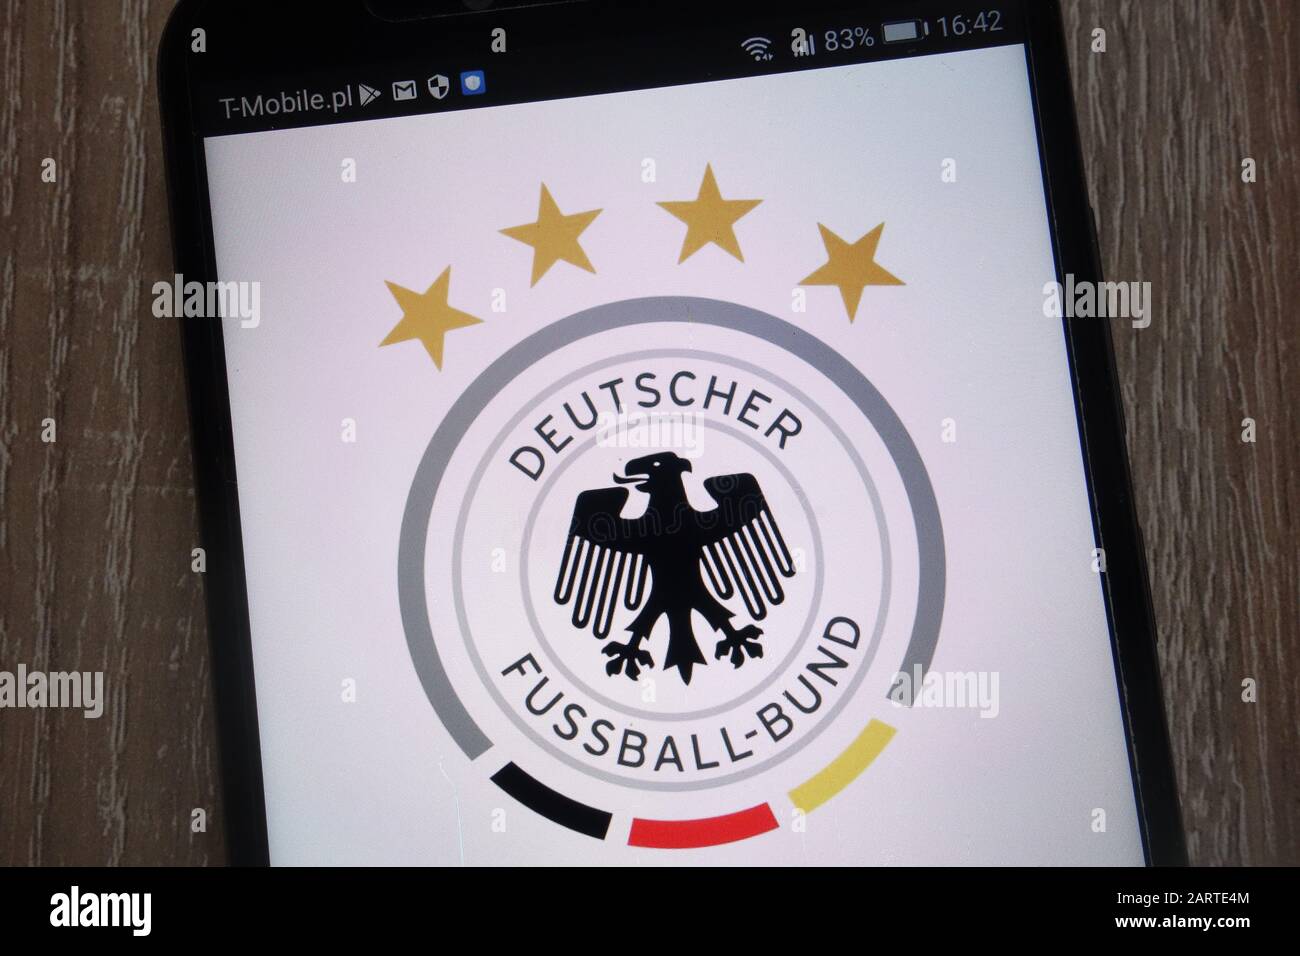 Germany national football team logo displayed on a modern smartphone Stock Photo